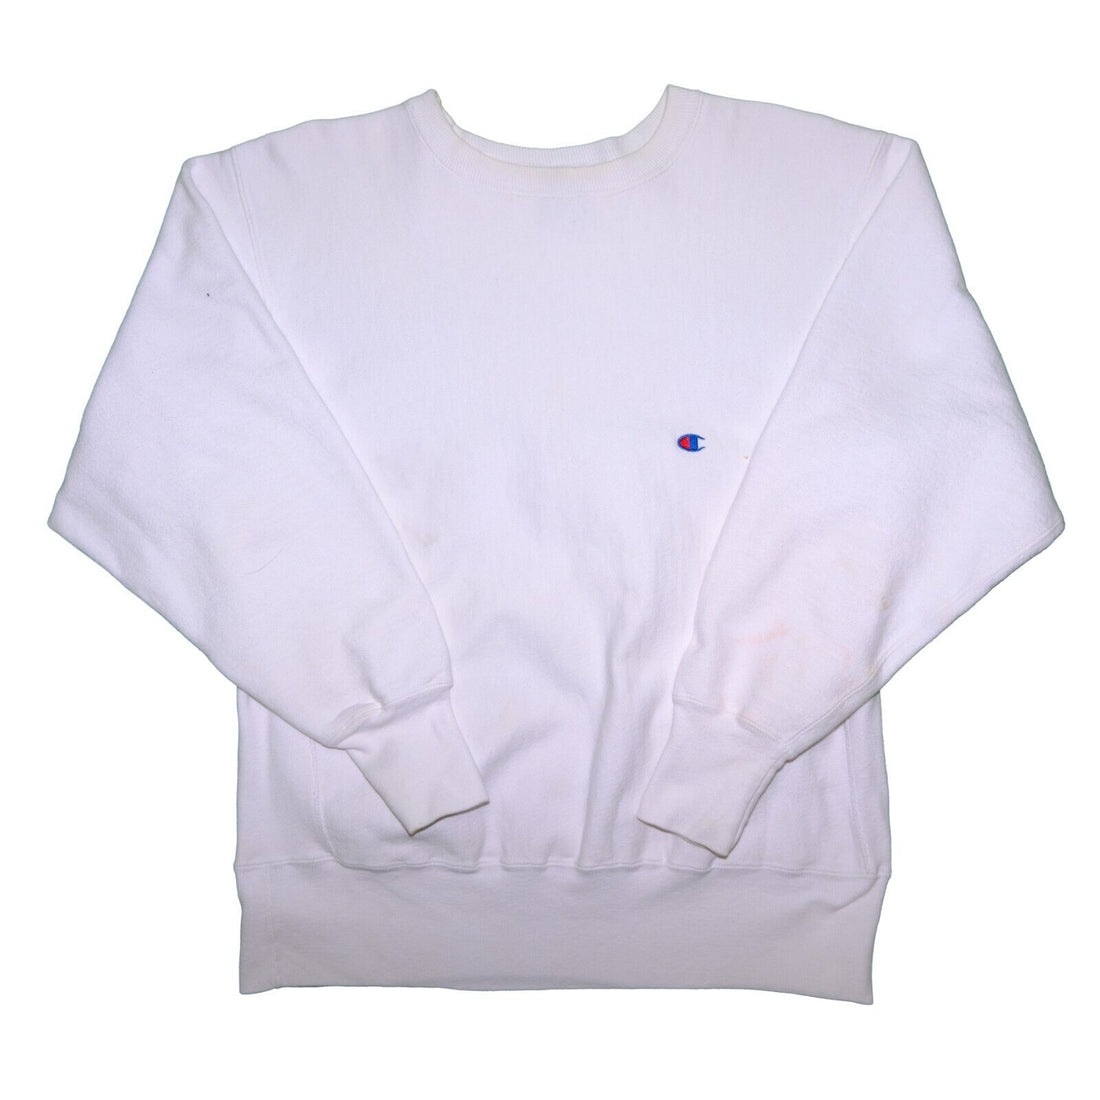 Vintage Champion Sweatshirt Crewneck Size Large White 90s Embroidered